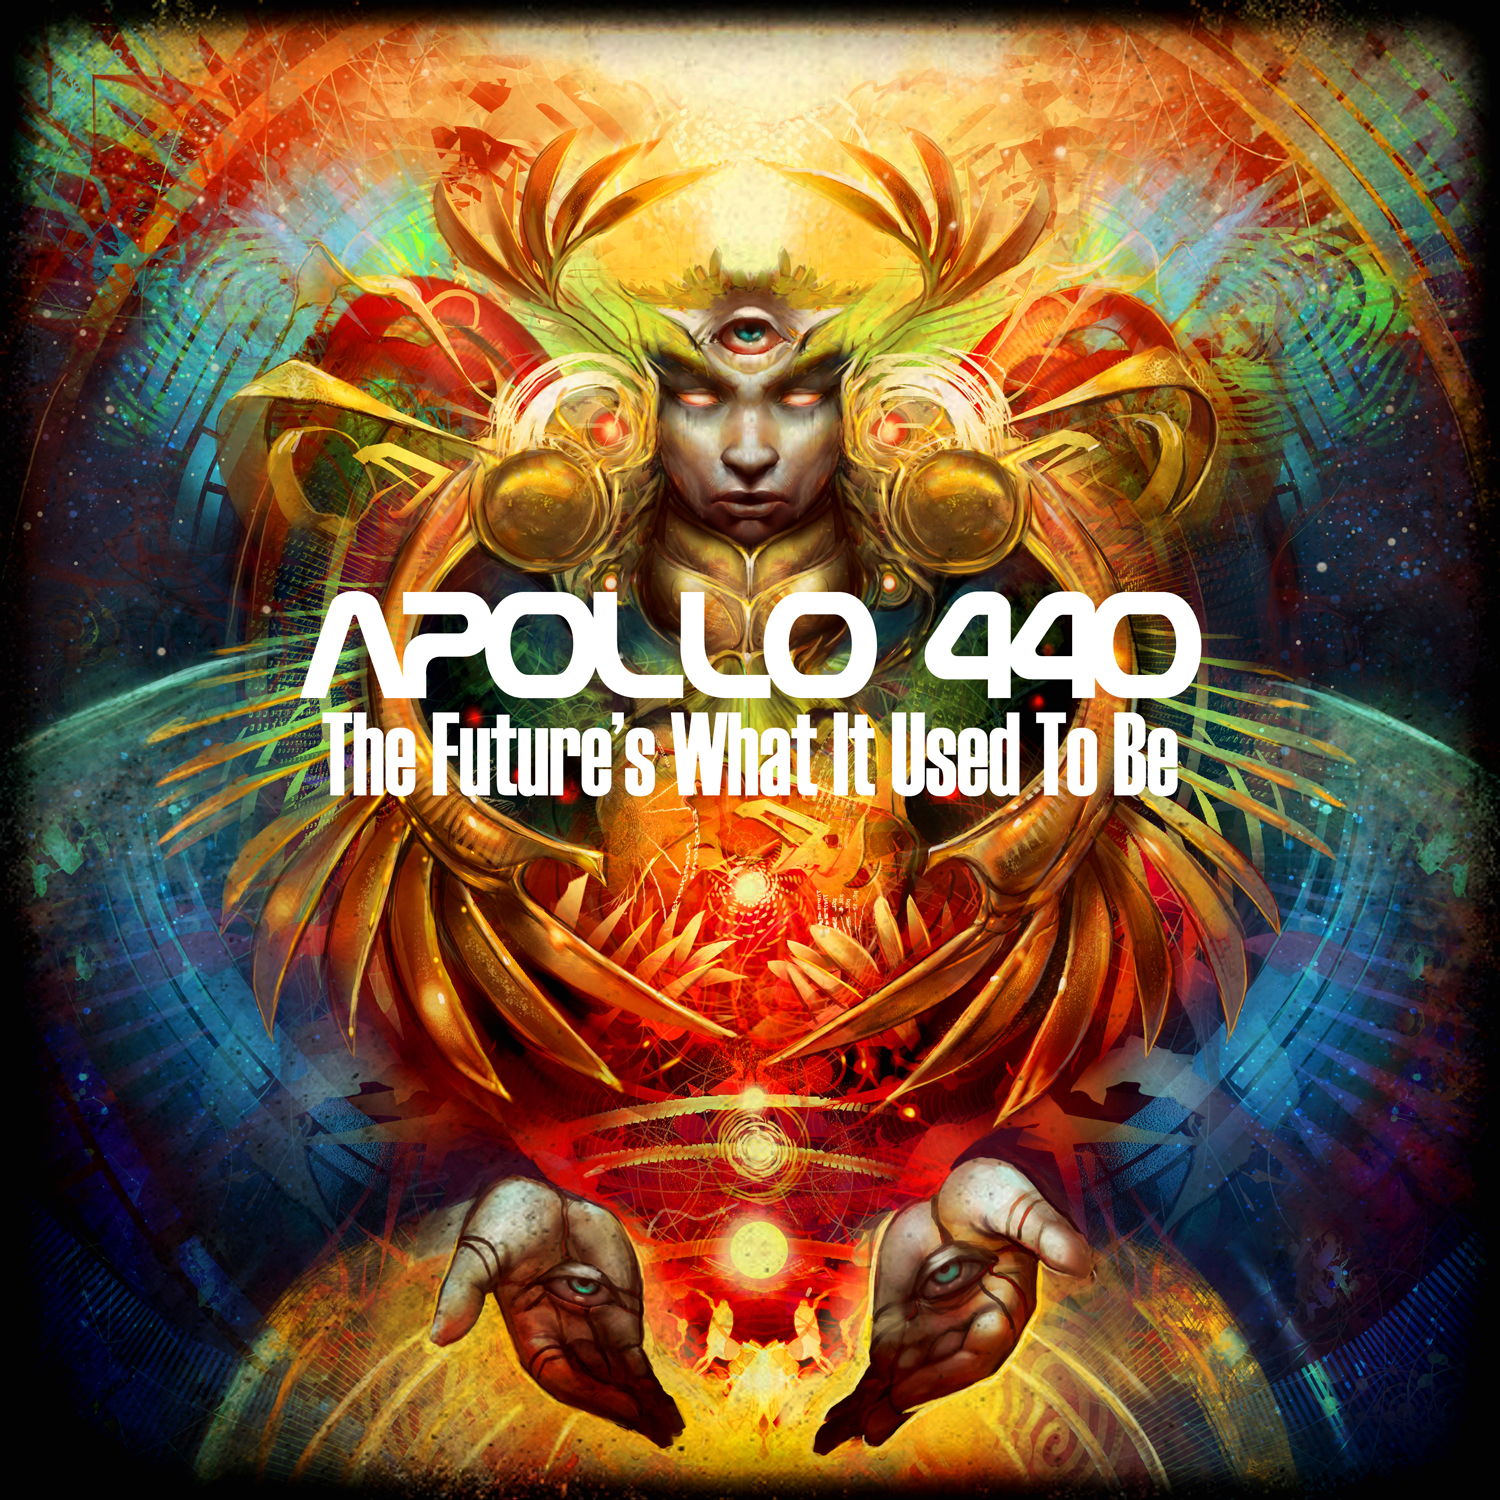 Apollo 440 "The Future's What It Used To Be" Album Art